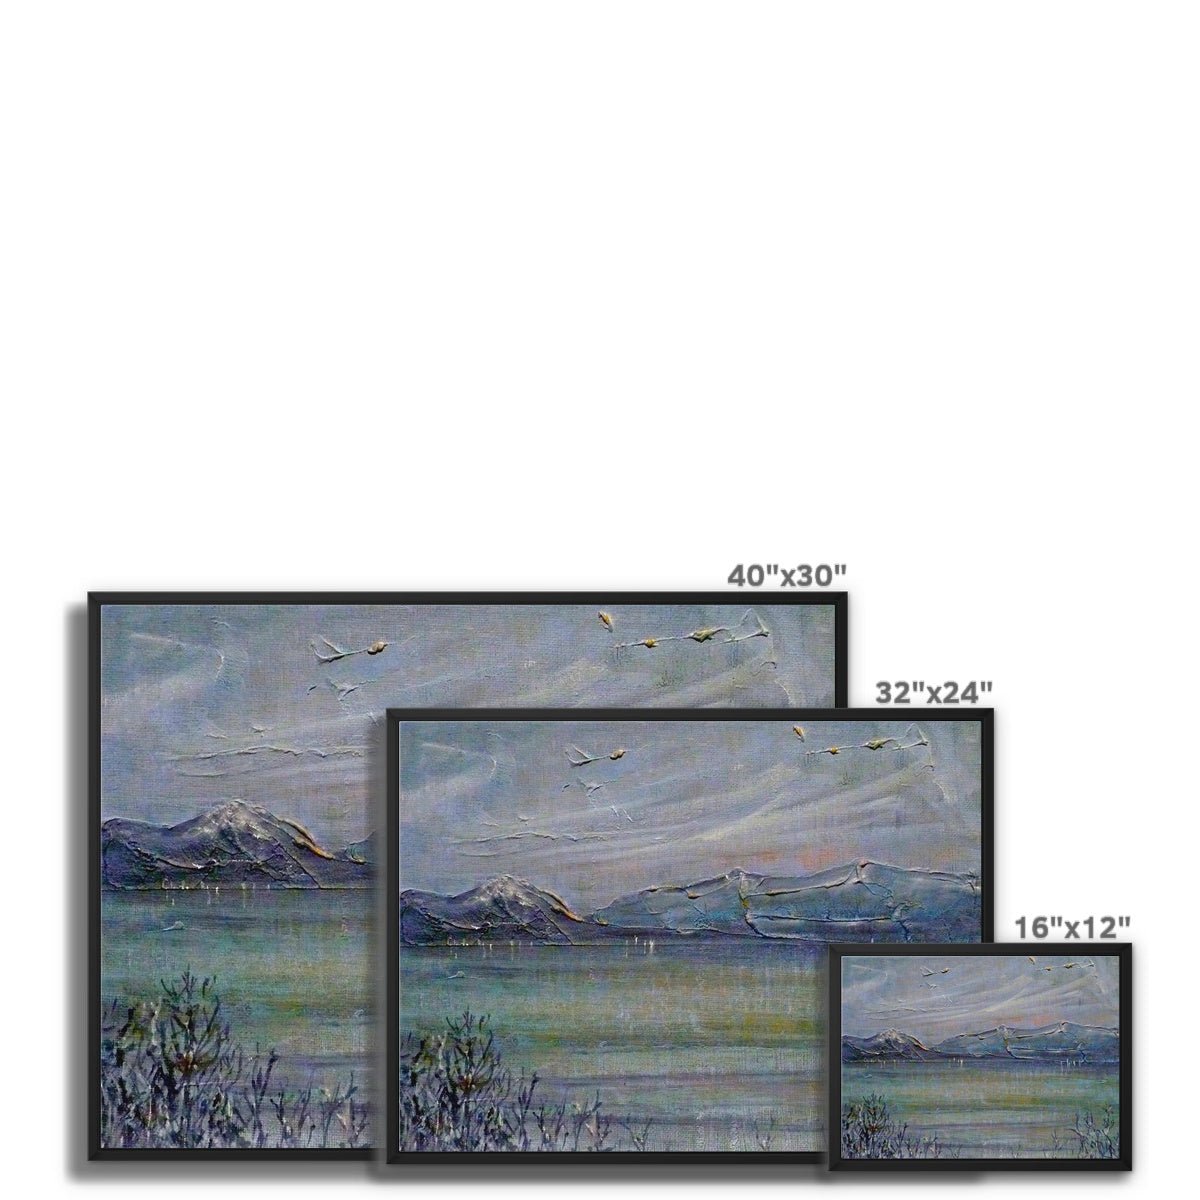 Loch Morlich Moonlight Painting | Framed Canvas From Scotland-Floating Framed Canvas Prints-Scottish Lochs & Mountains Art Gallery-Paintings, Prints, Homeware, Art Gifts From Scotland By Scottish Artist Kevin Hunter